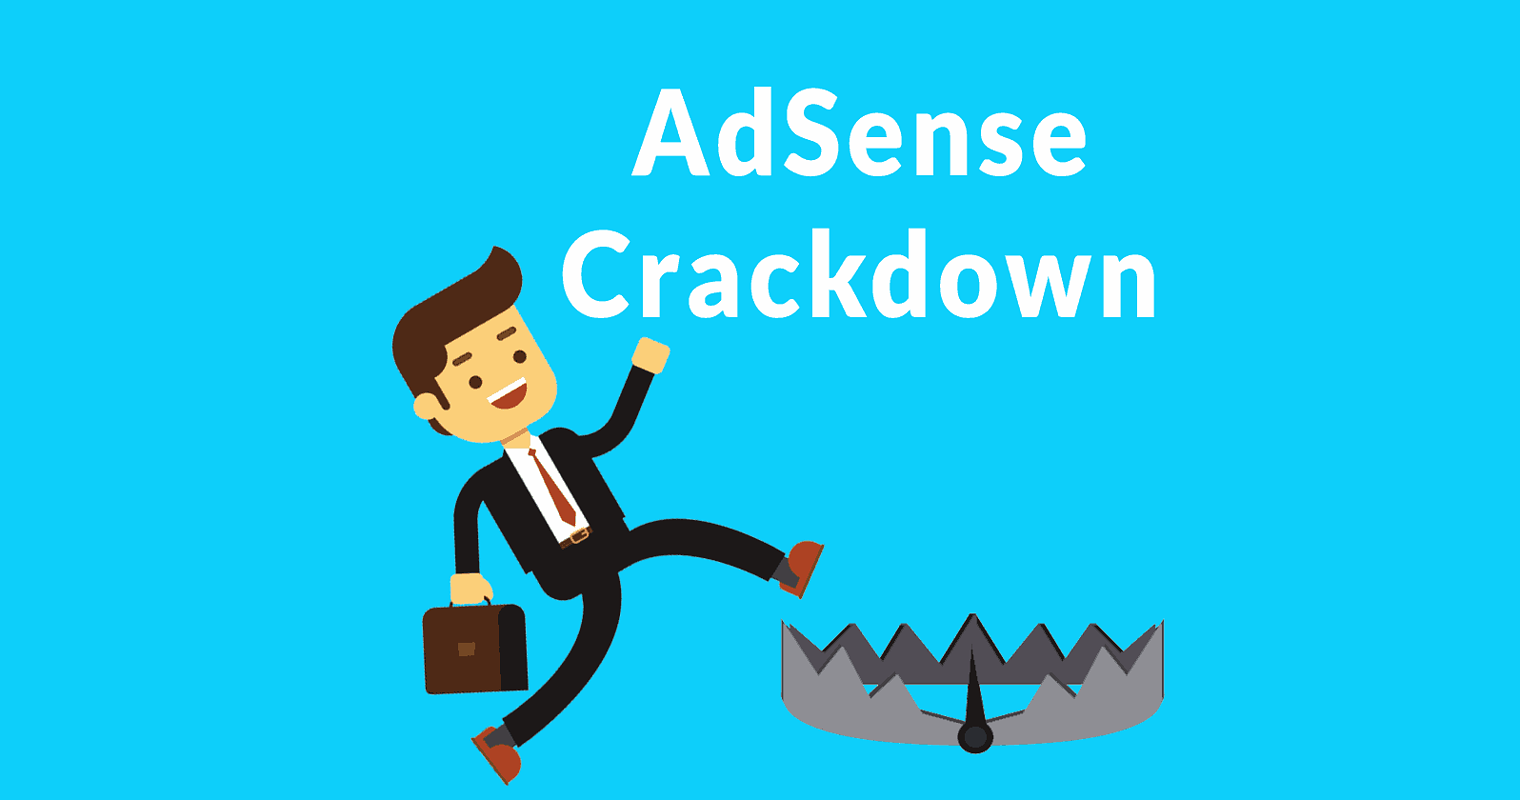 Google AdSense Announces Crackdown on Invalid Clicks